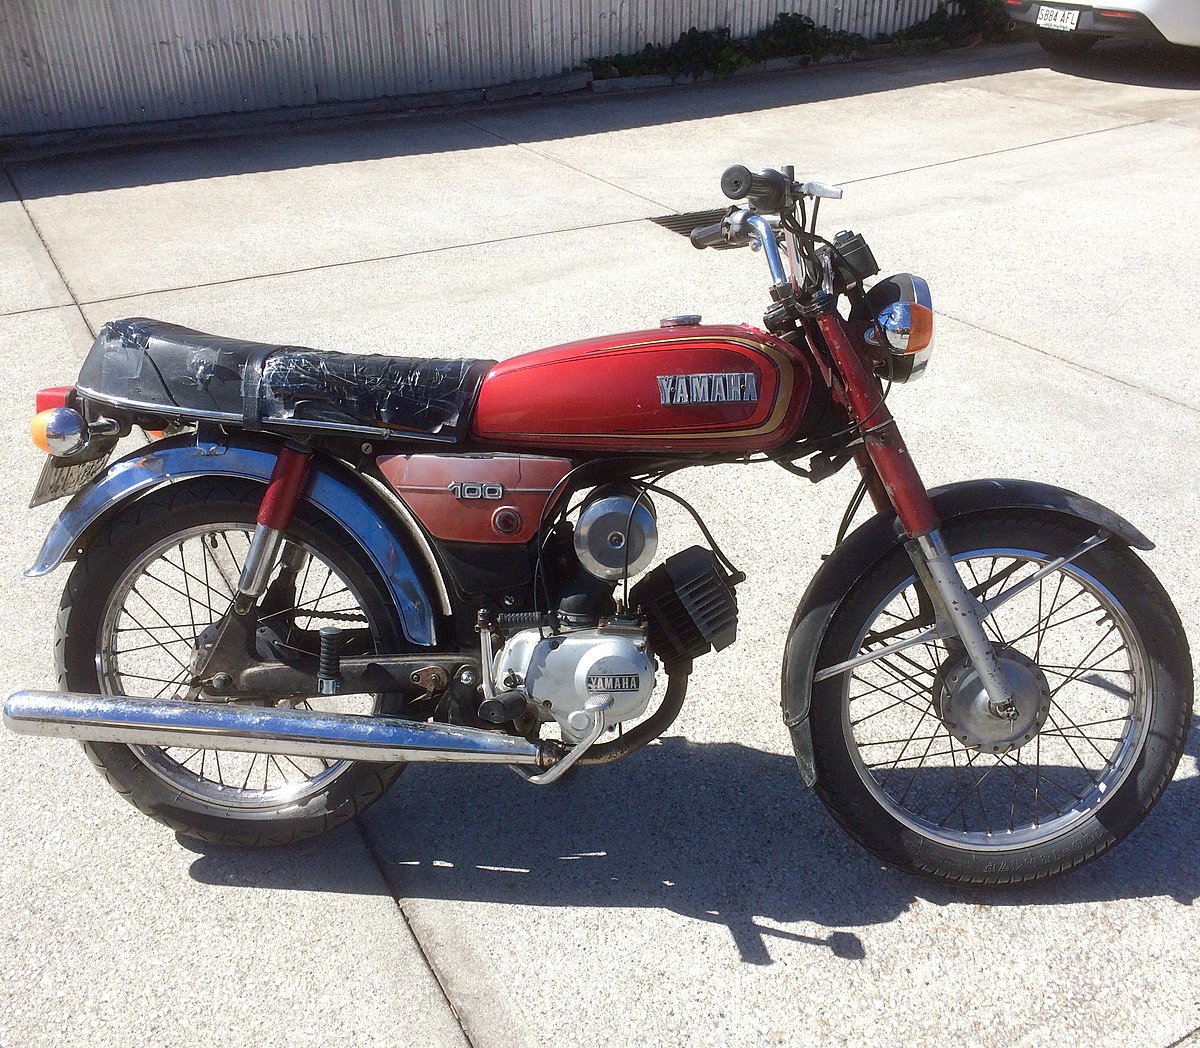 File:Yamaha DX100 Motorcycle (1980 Model).jpg - Wikimedia Commons